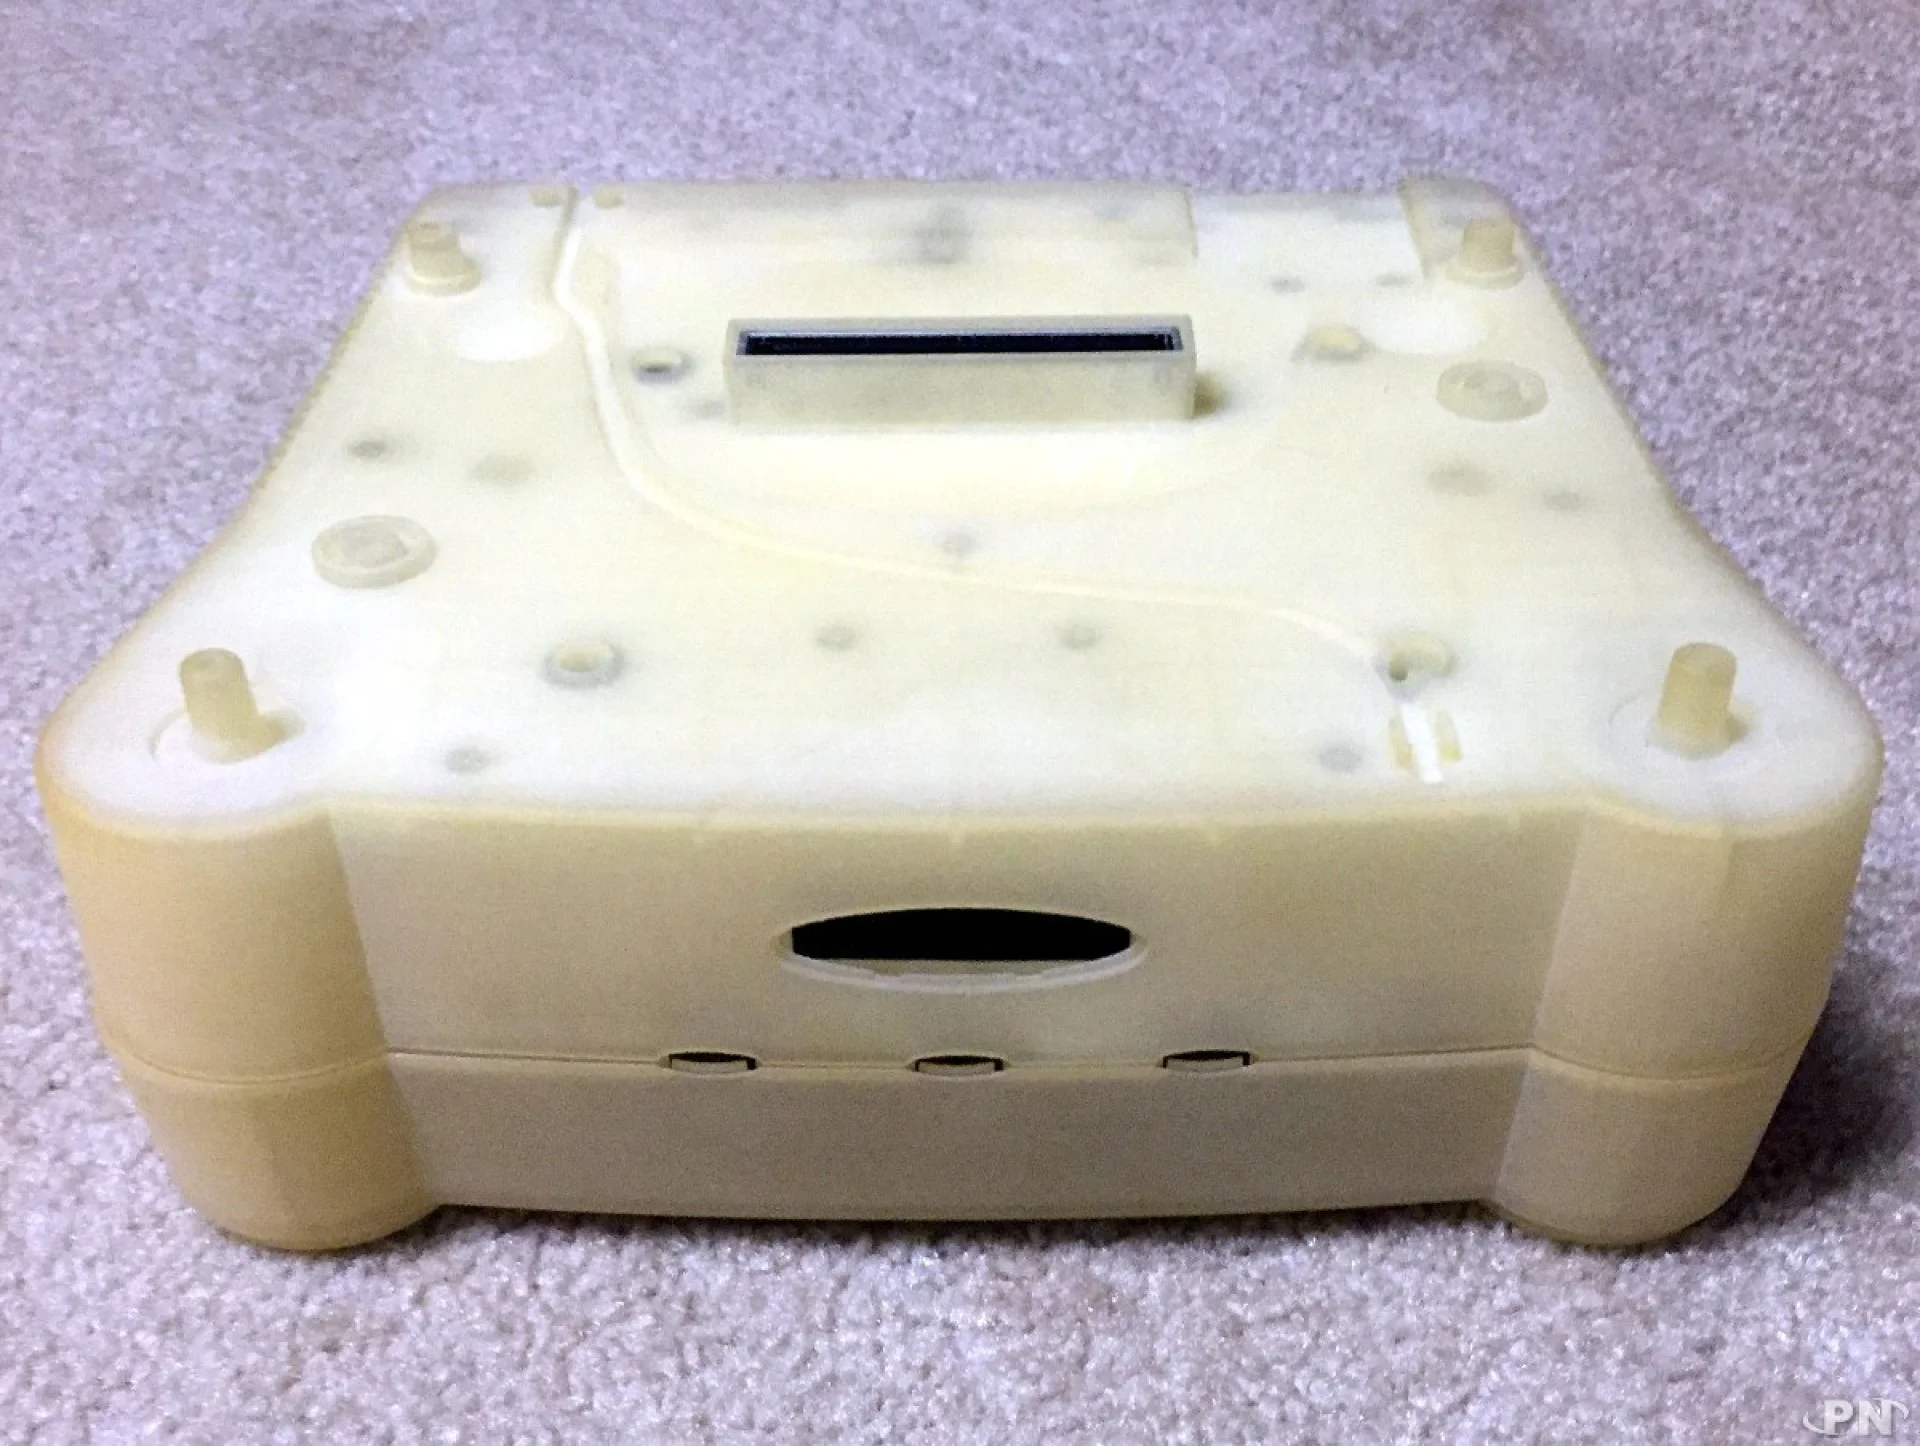  Nintendo 64DD 2nd Prototype Console